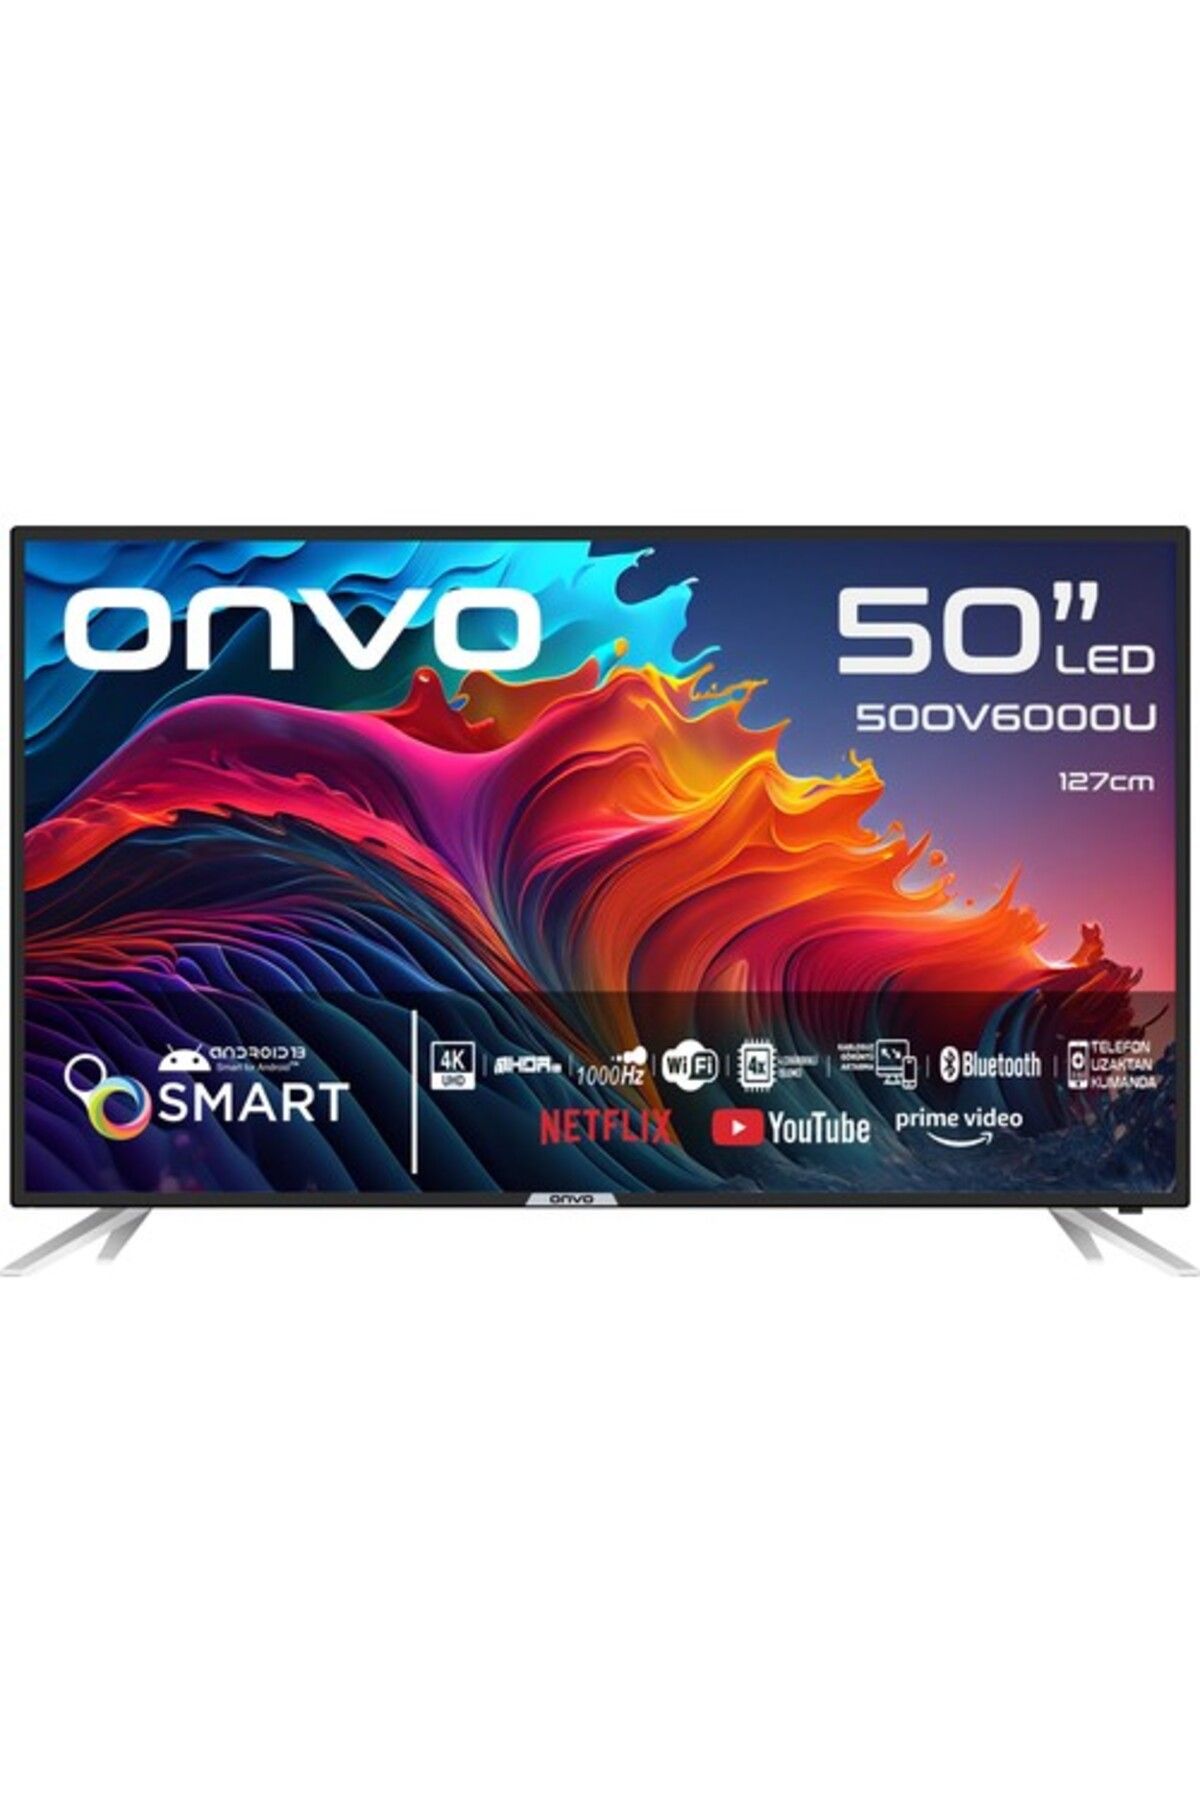 ONVO 50OV6000U 50" 127 Ekran Uydu Alıcılı 4K Ultra Hd Androıd Smart LED Tv